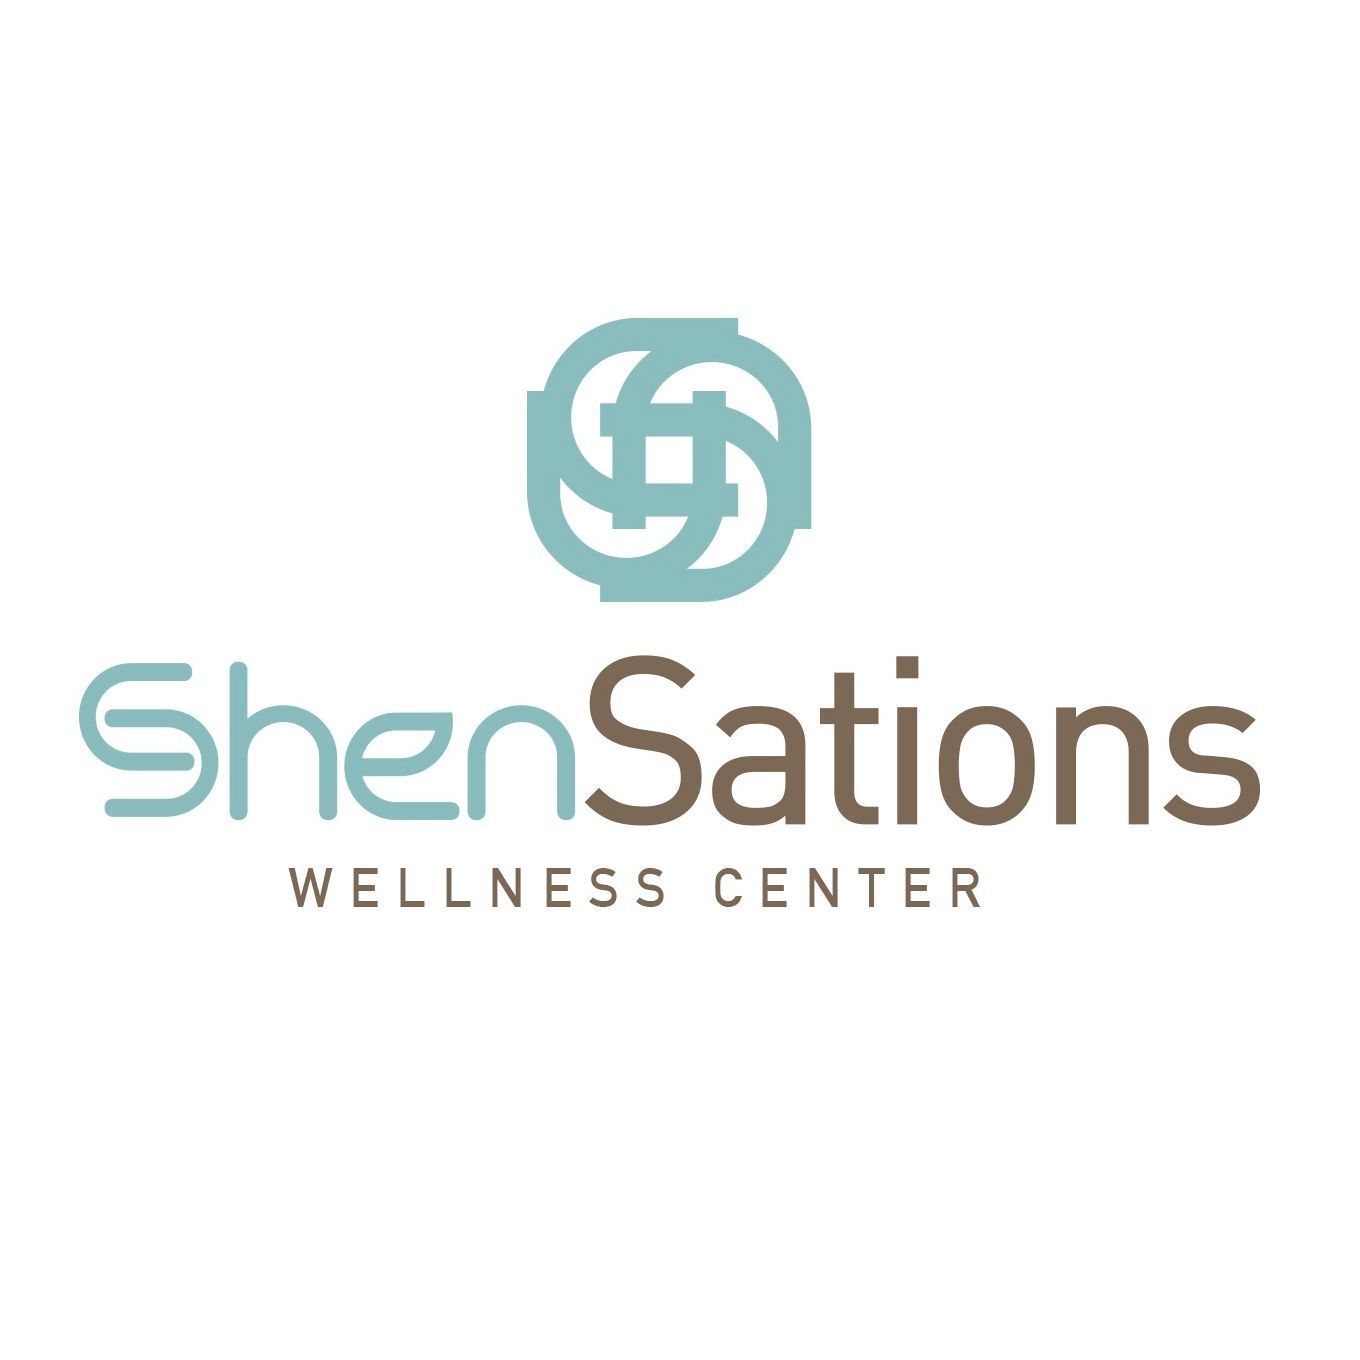 ShenSations Wellness Center, Calle Jesús del Gran Poder, 20, Local Izquierdo, 41002, Sevilla